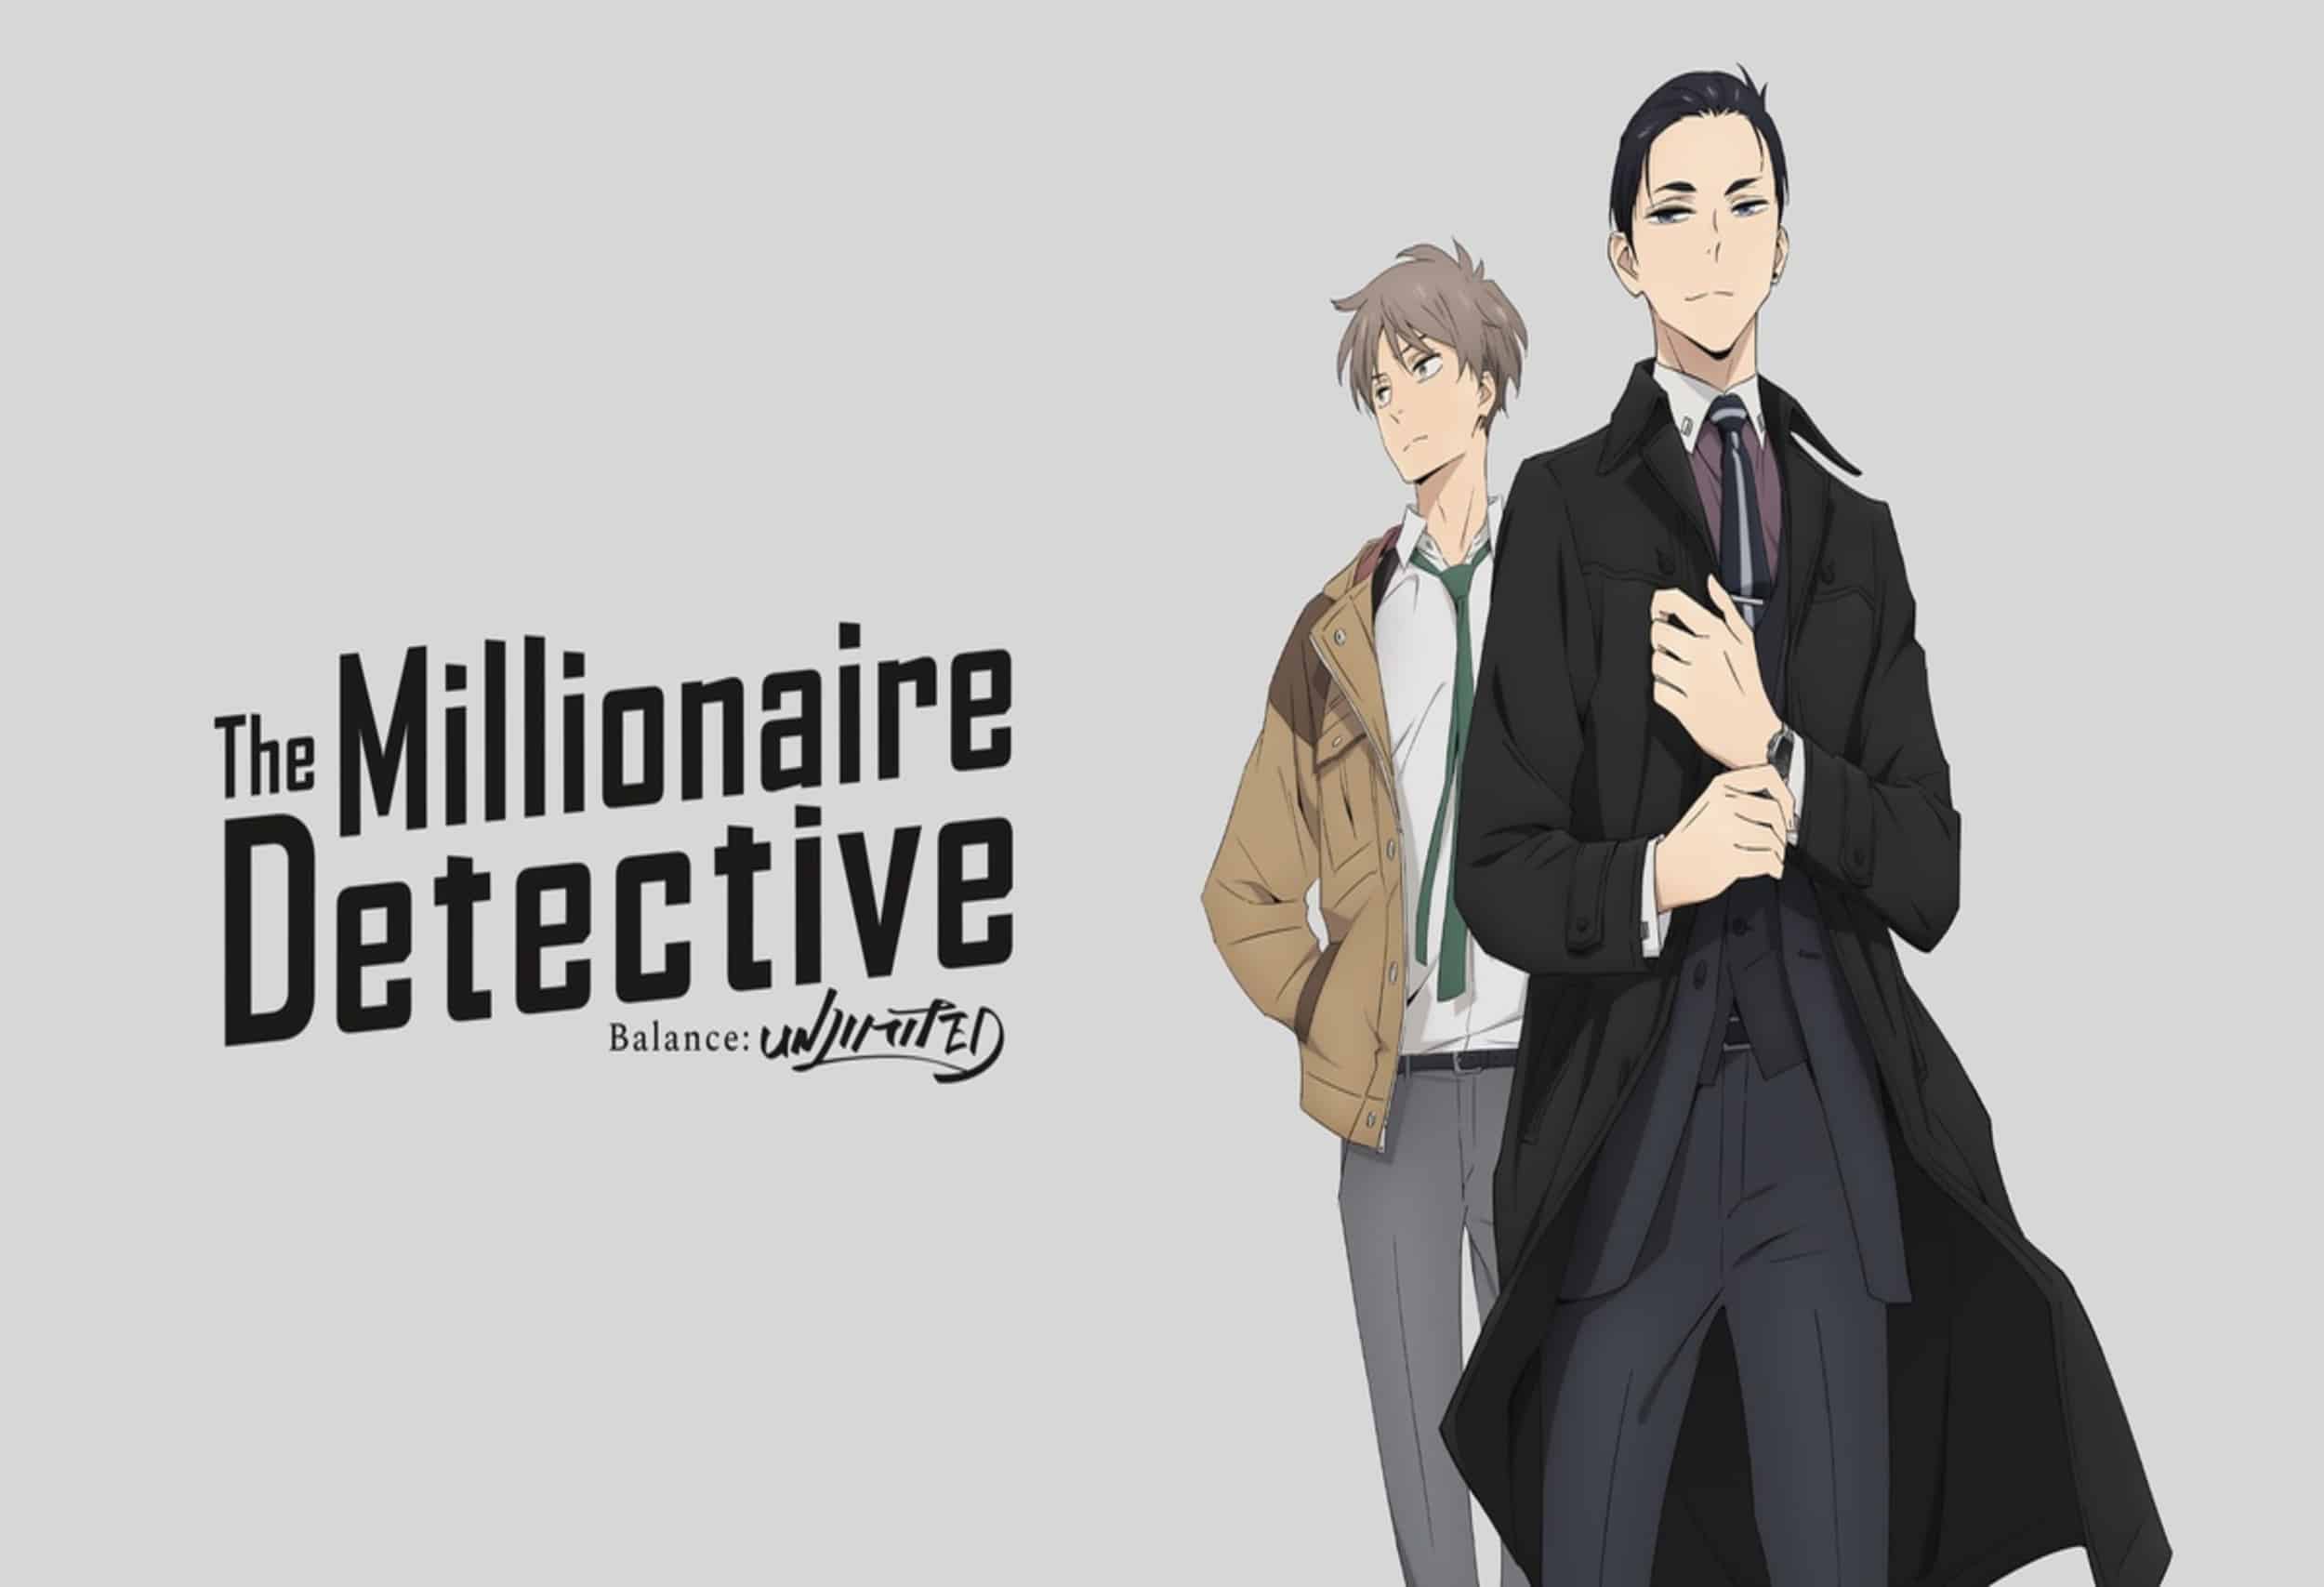 The Millionaire Detective Balance: Unlimited anime